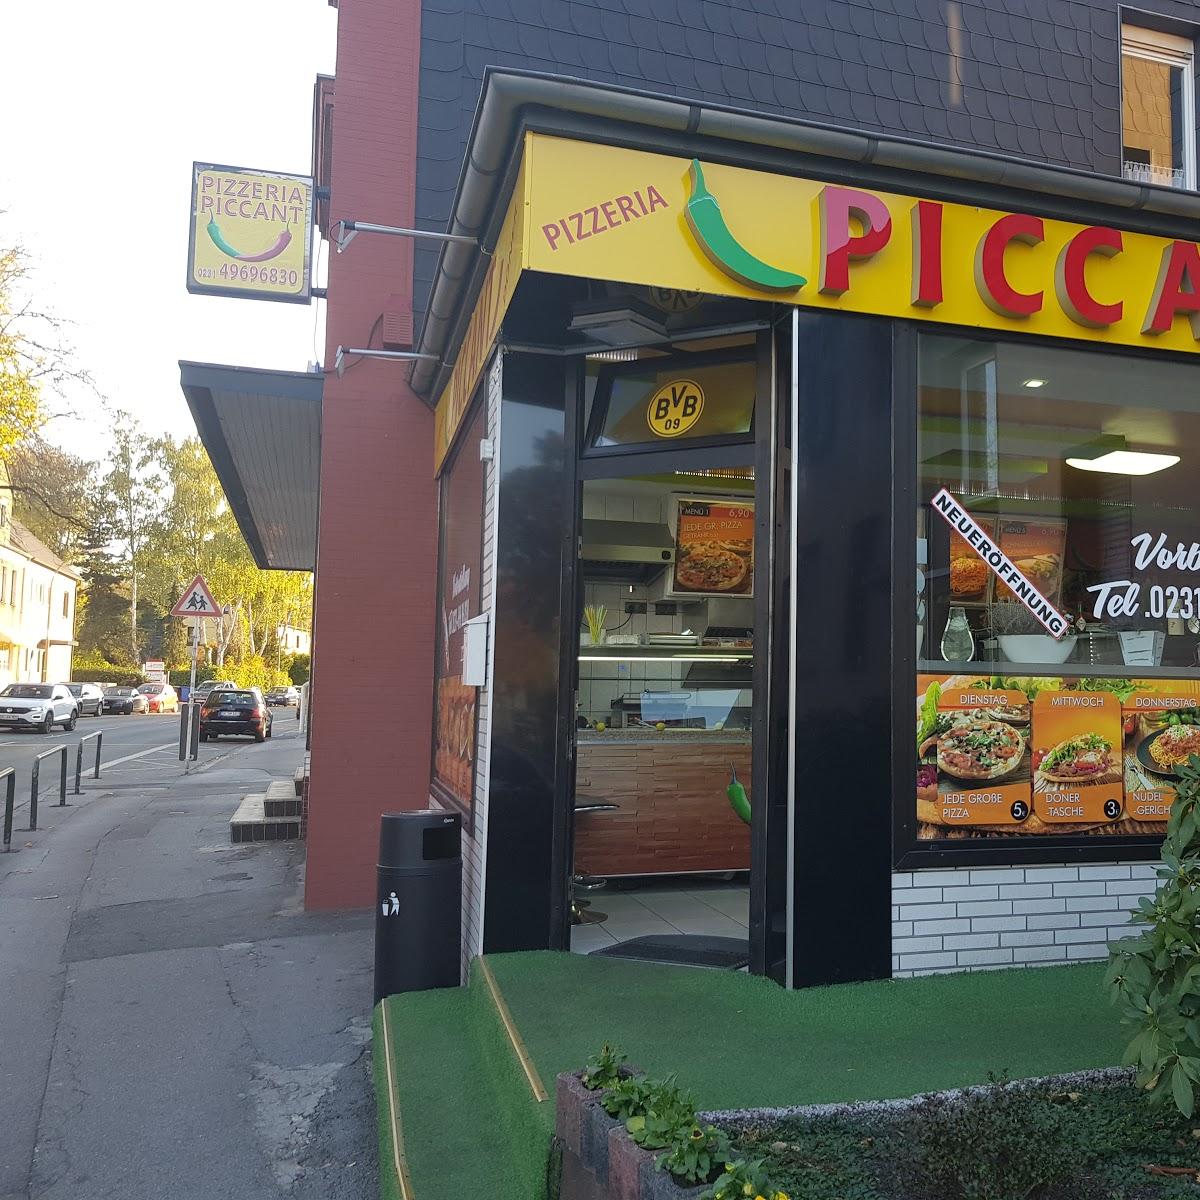 Restaurant "Pizzeria Piccant" in Dortmund